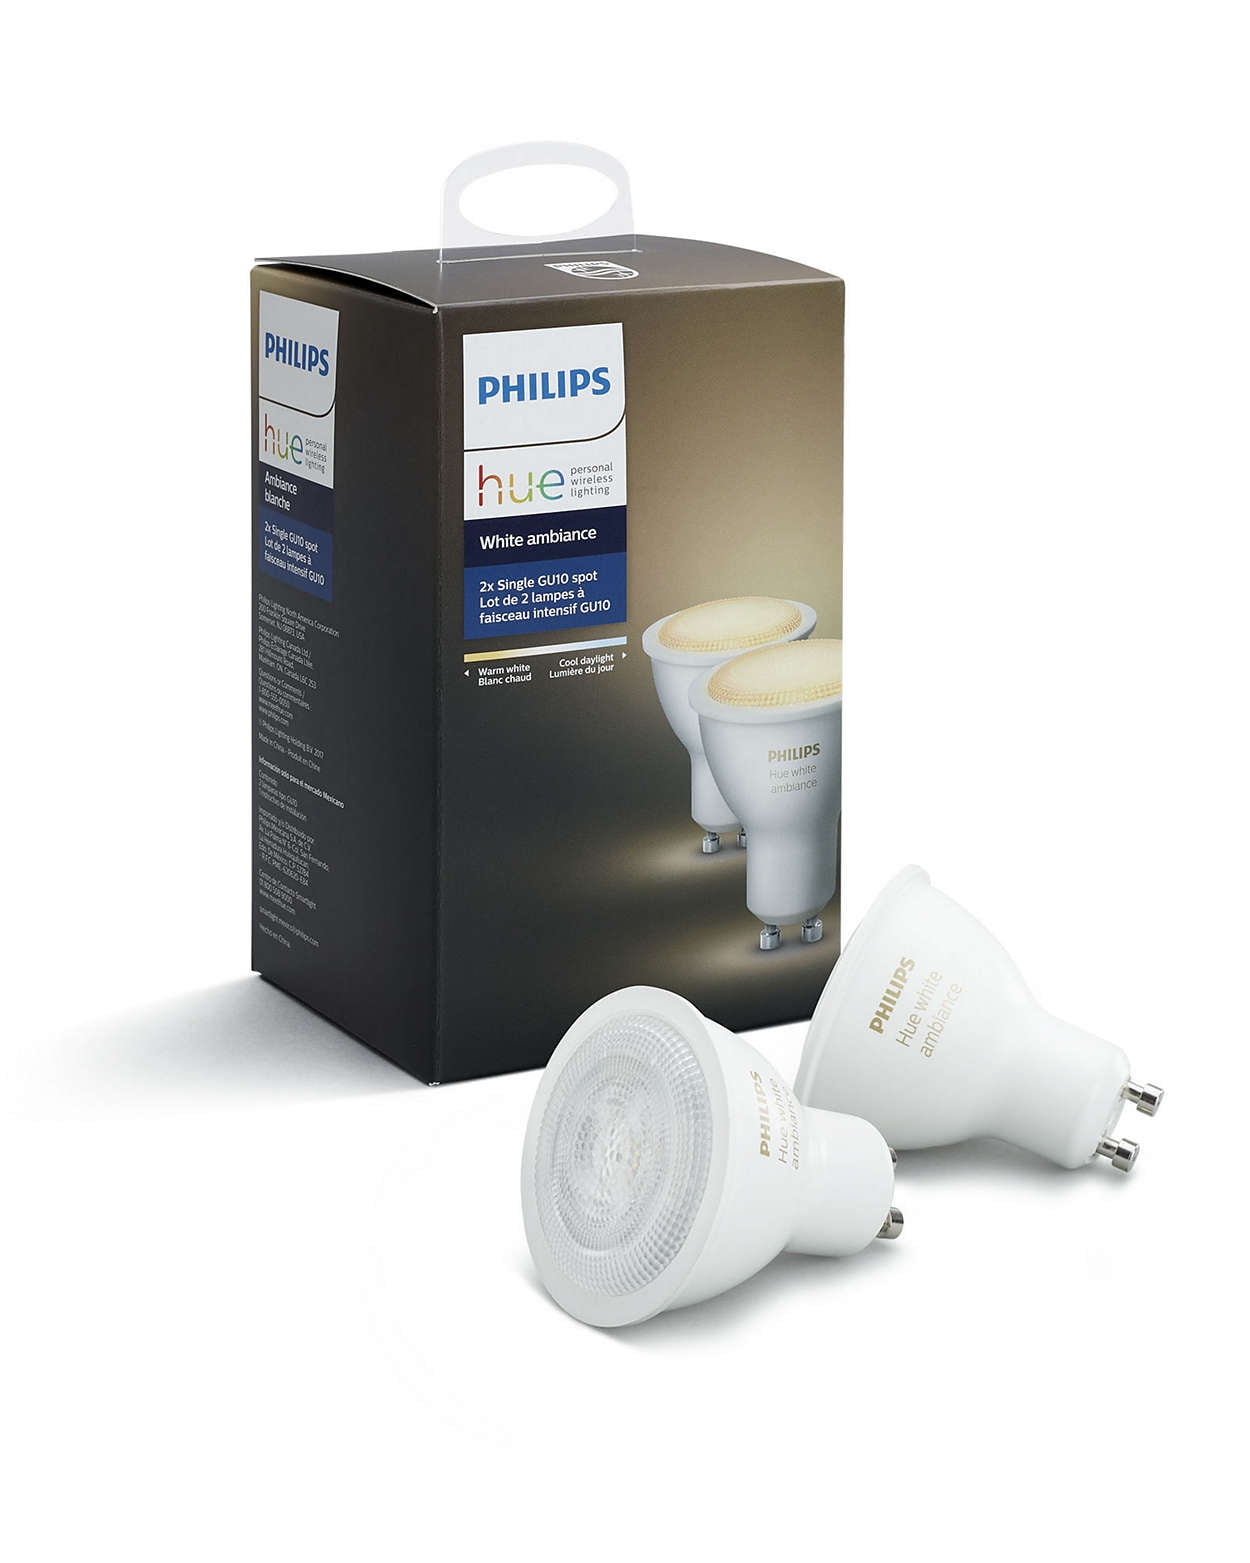 Philips Hue White Ambiance GU10 Smart Bluetooth LED Light Bulb 2 Pack 